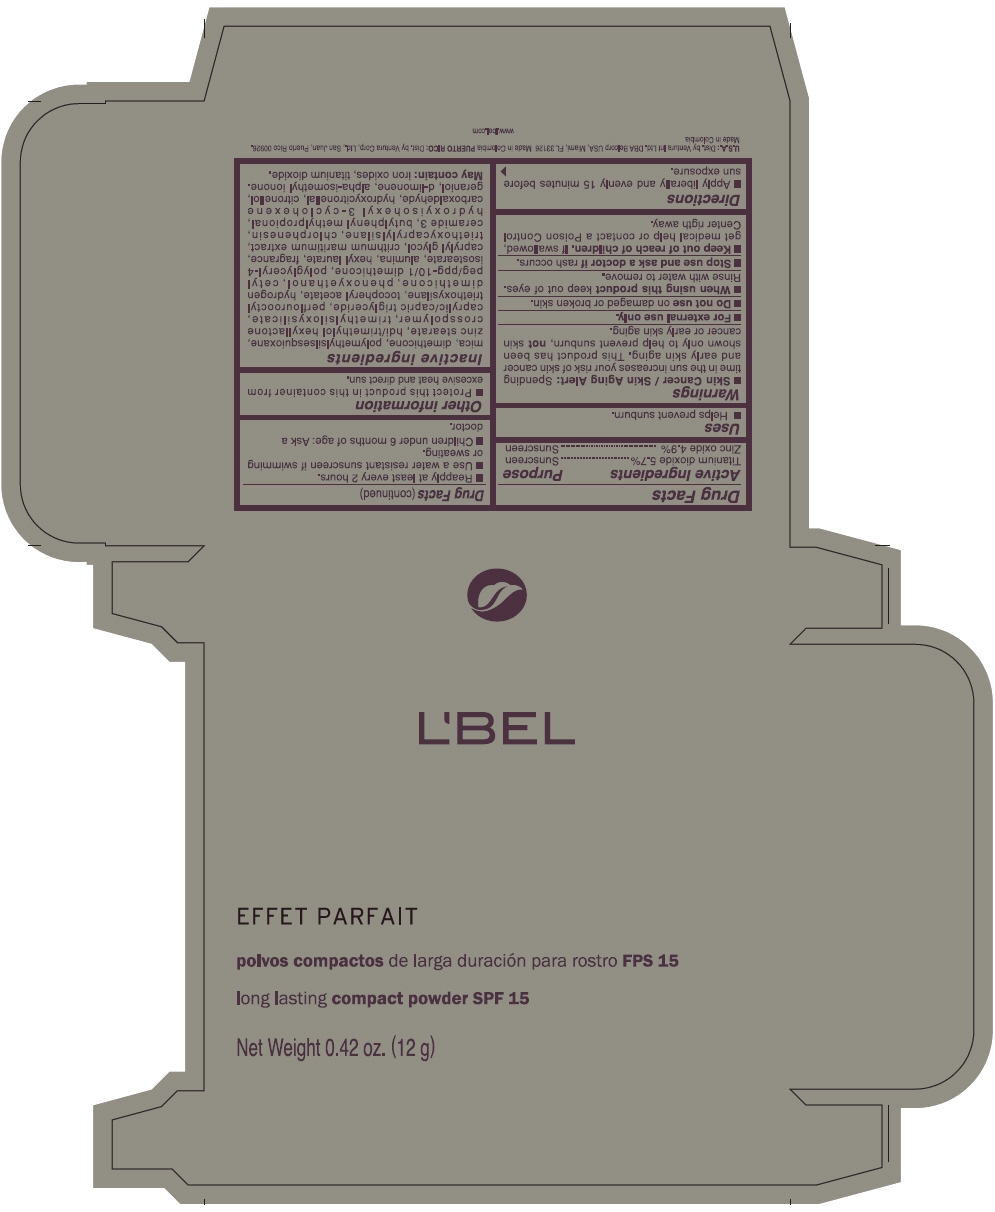 PRINCIPAL DISPLAY PANEL - 12 g Case Box - (CLAIRE 2) - BEIGE